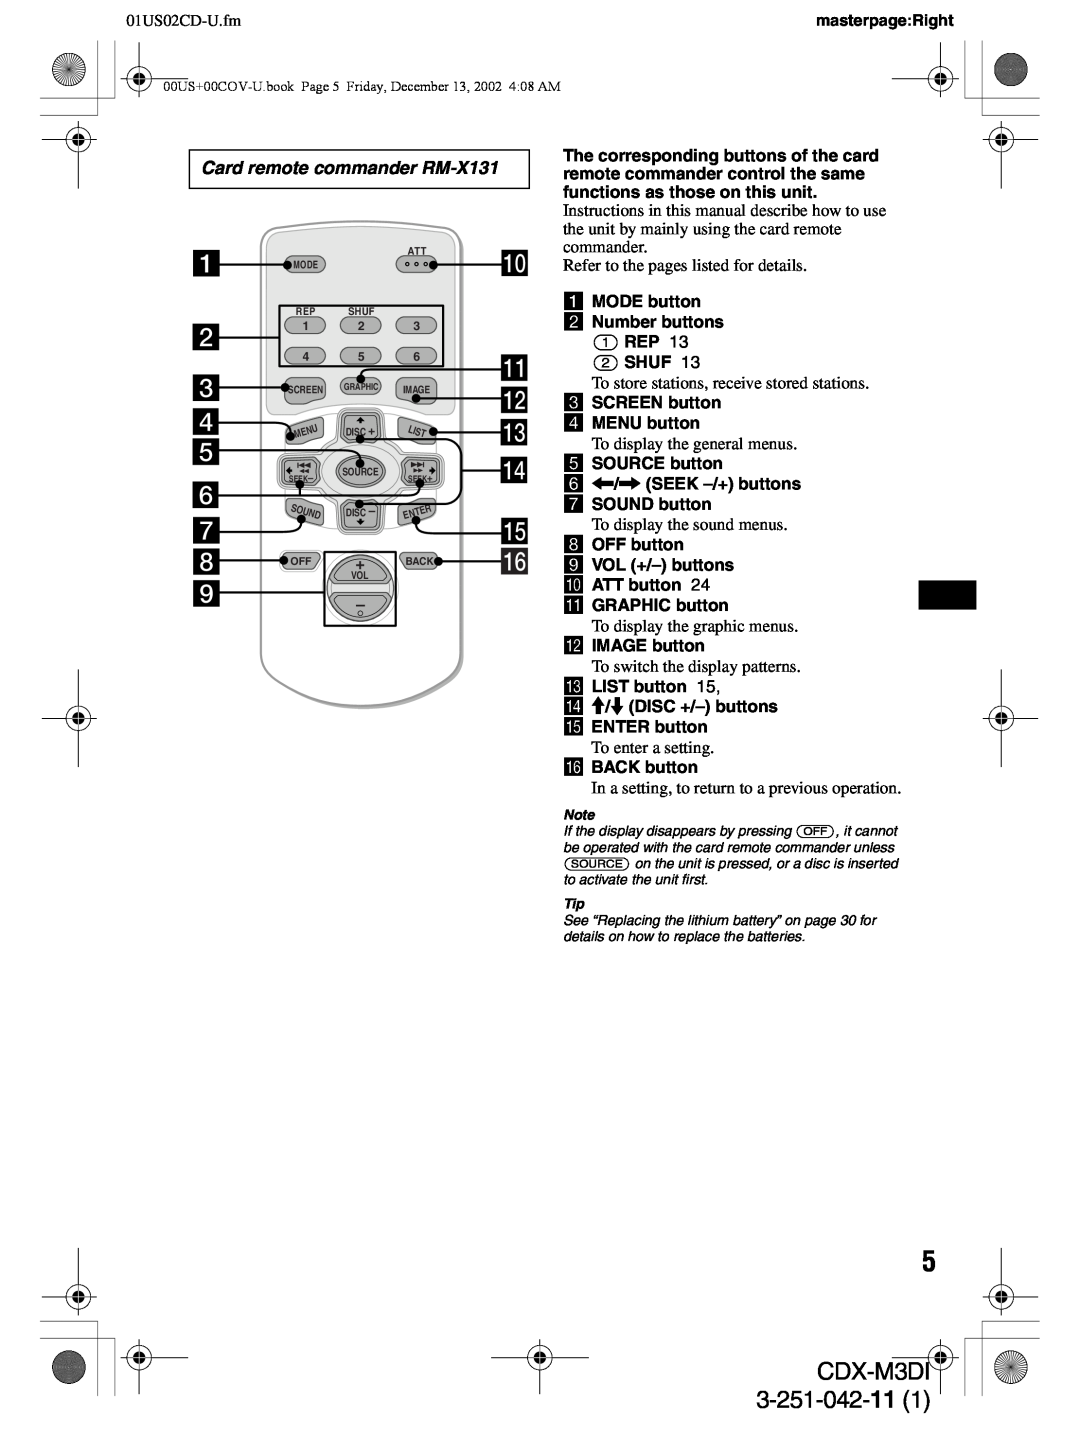 Sony CDX-M3DI operating instructions Card remote commander RM-X131, 01US02CD-U.fm 